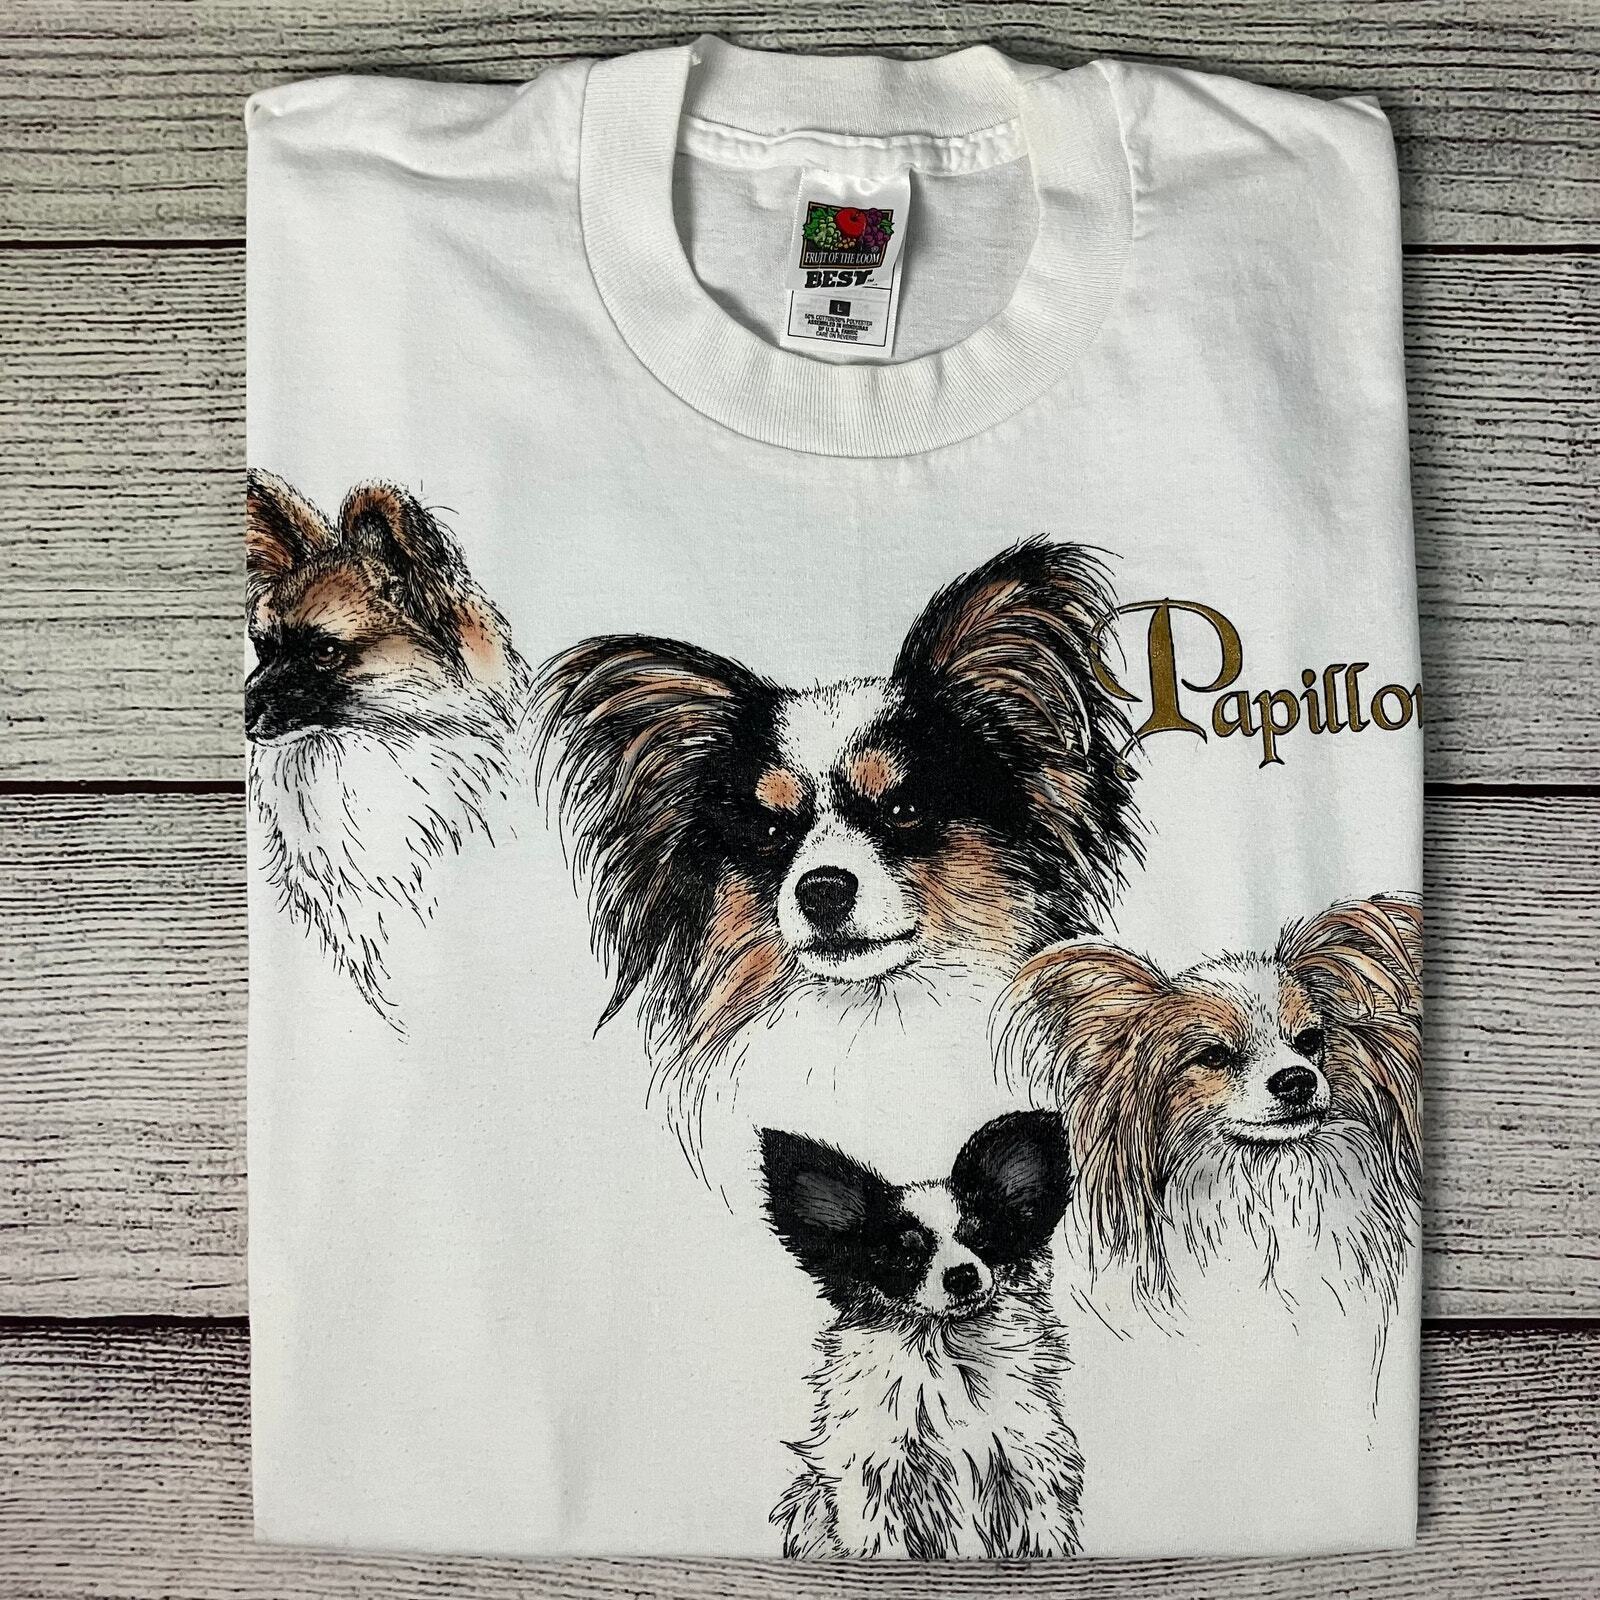 Vintage 1990s Papillon Dogs Single Stitch Animal T-shirt size Large Single St.